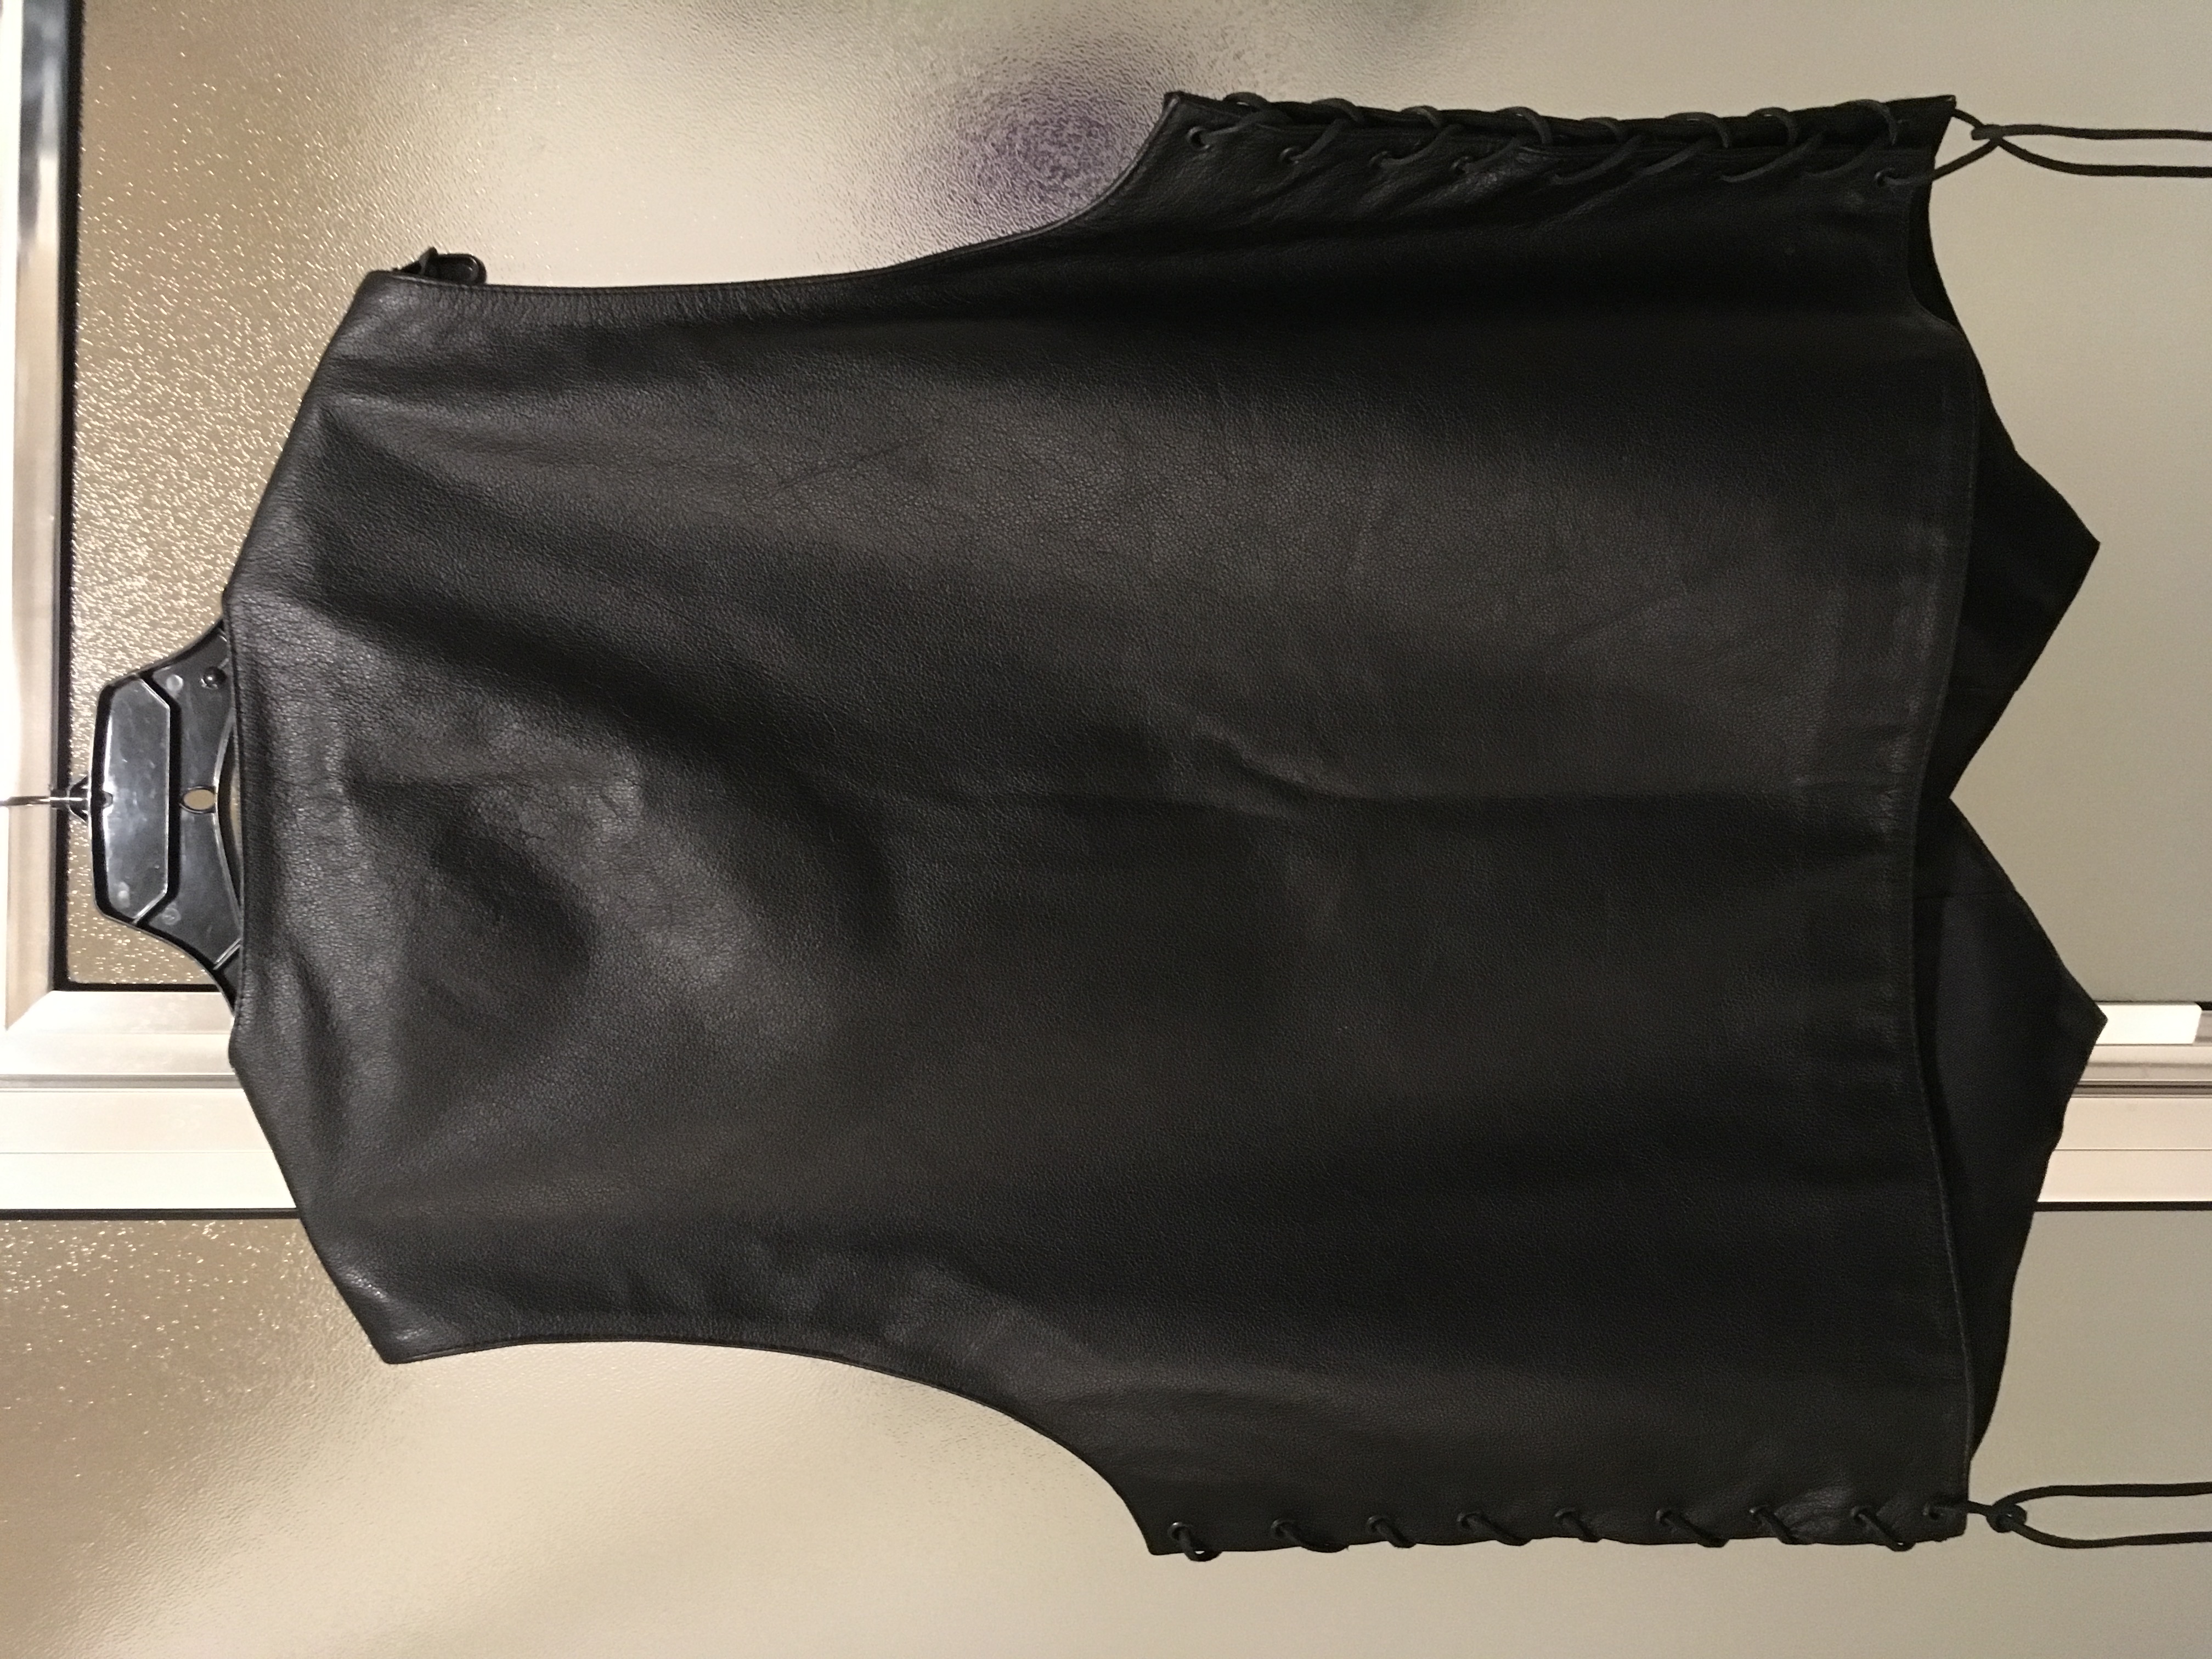 Leather Vest with CC pockets. - Harley Davidson Forums